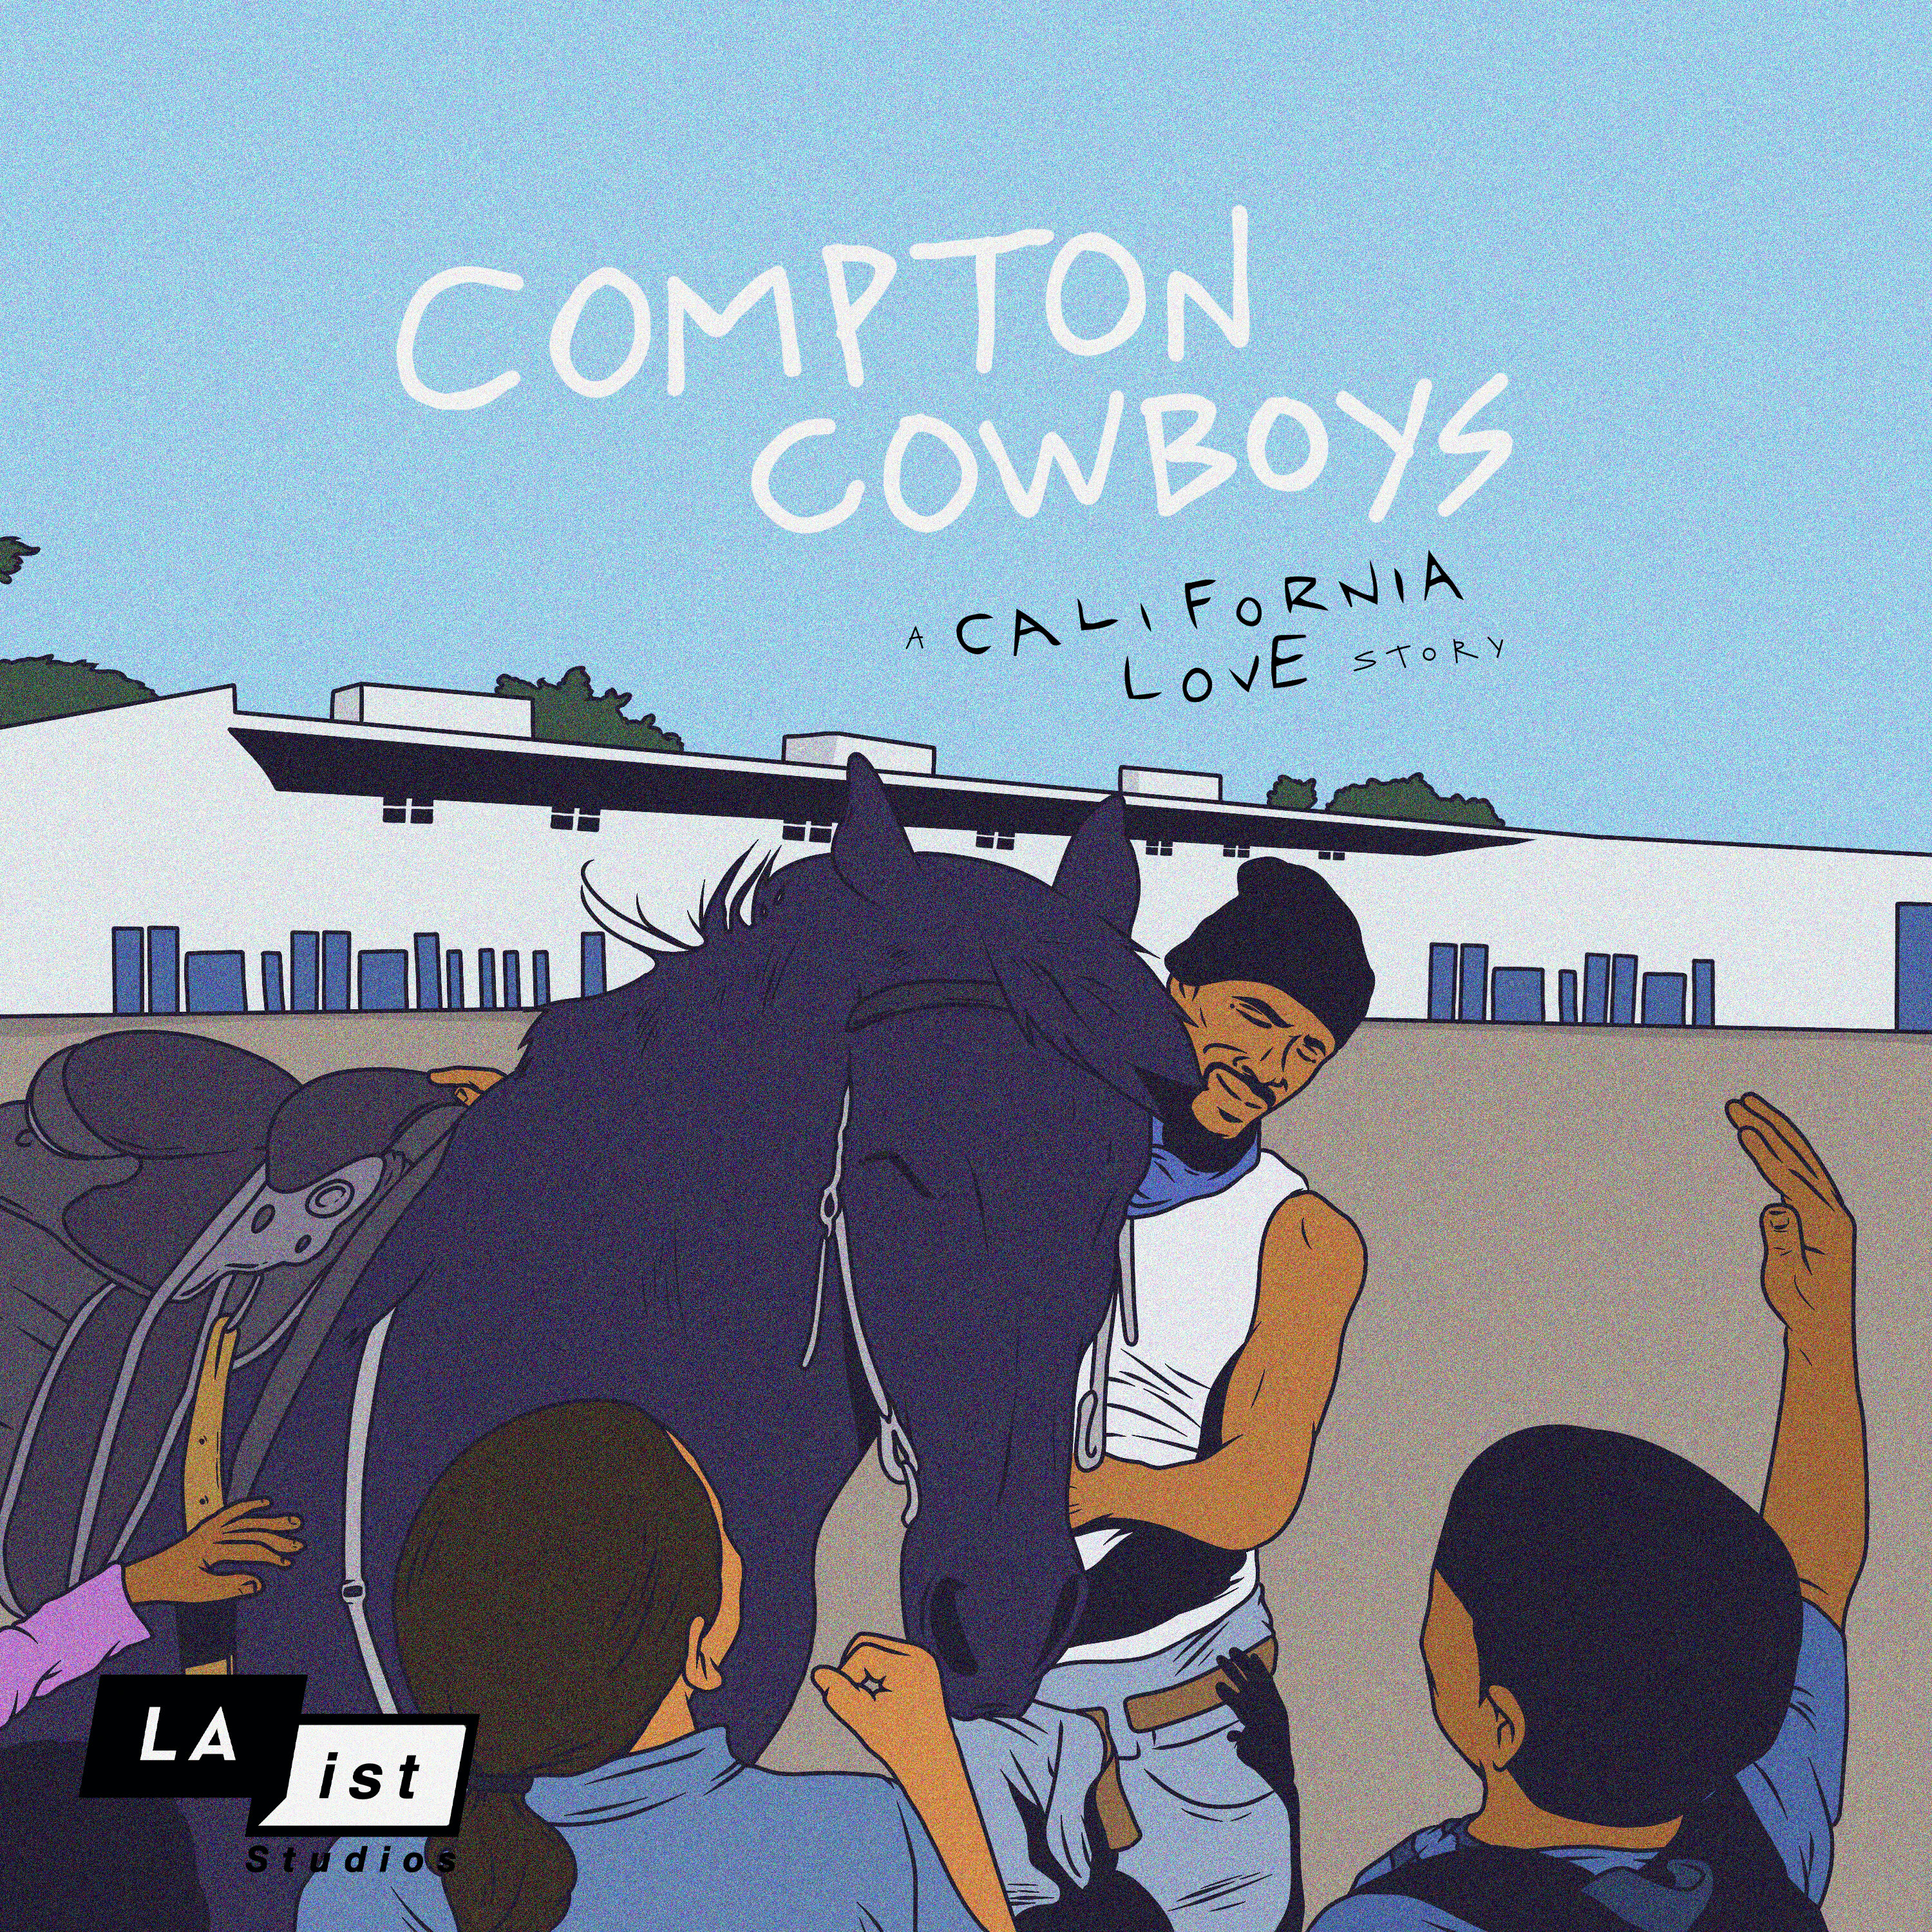 Compton Cowboys